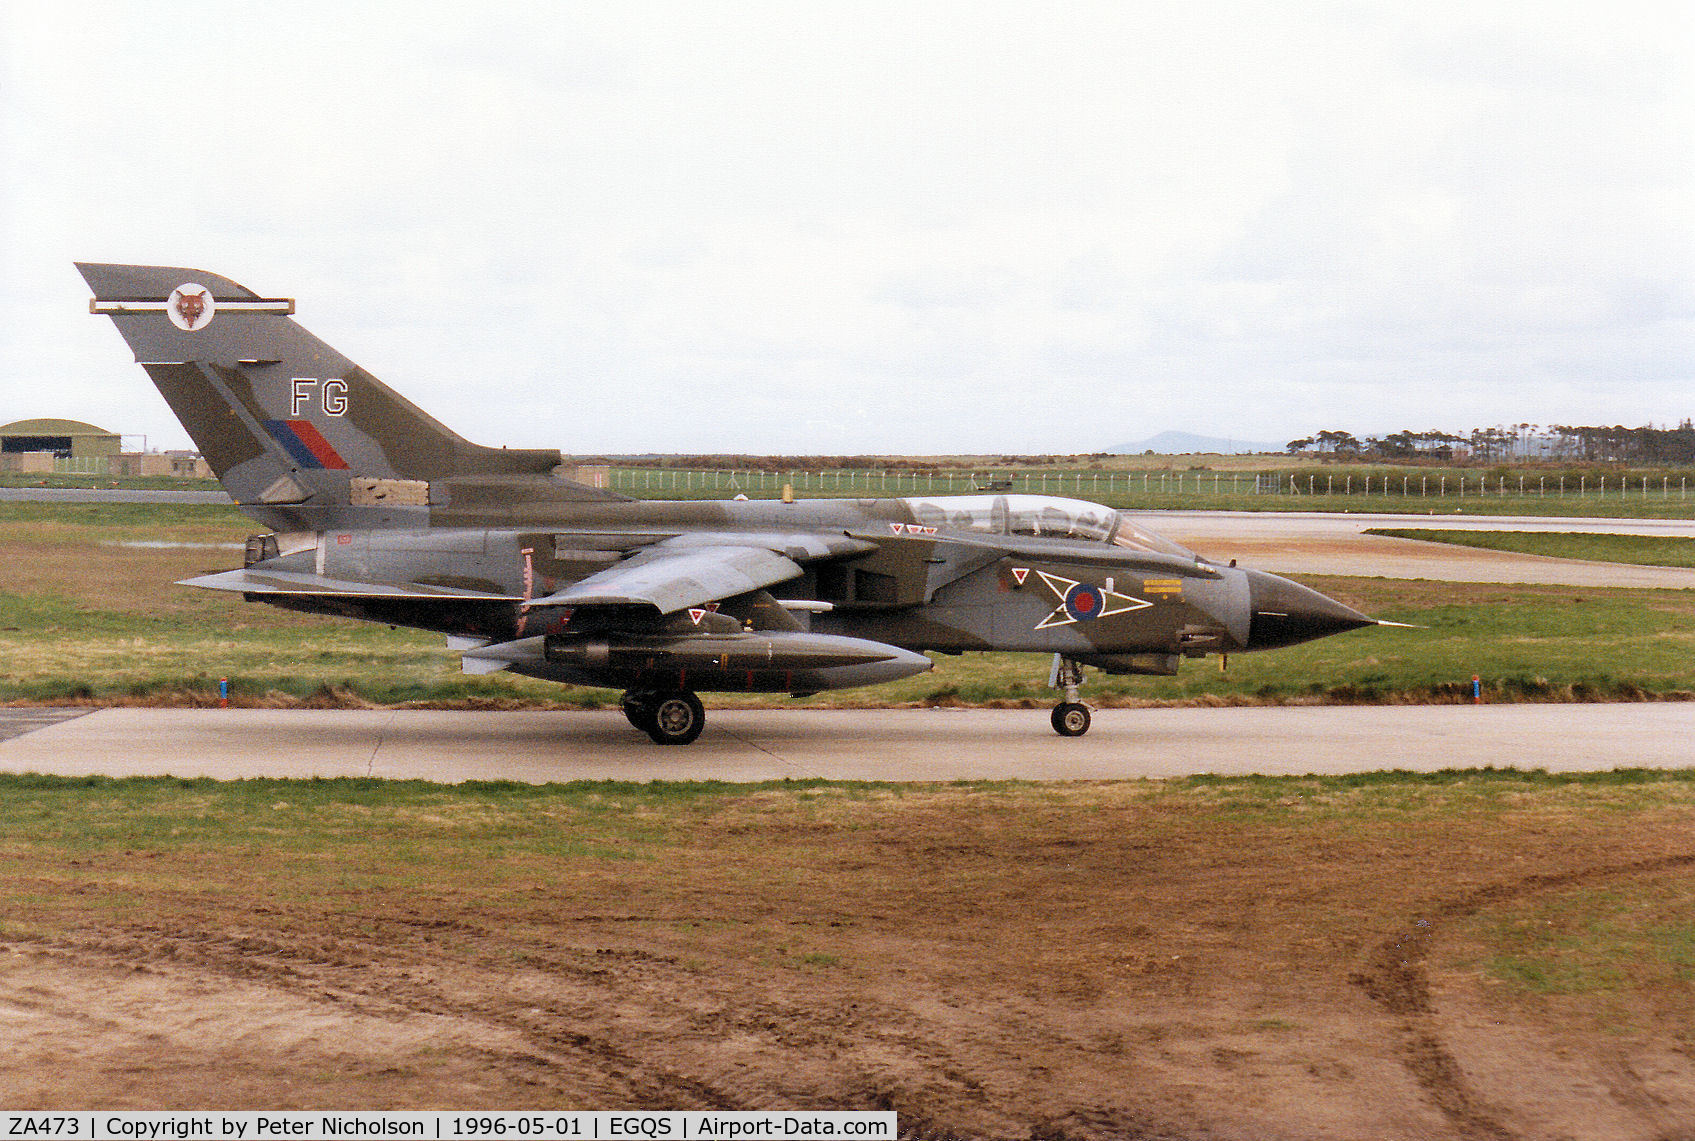 ZA473, 1983 Panavia Tornado GR.1 C/N 298/BS103/3139, Tornado GR.1B, callsign Jackal 2, of 12 Squadron taxying to Runway 05 at RAF Lossiemouth in May 1996.